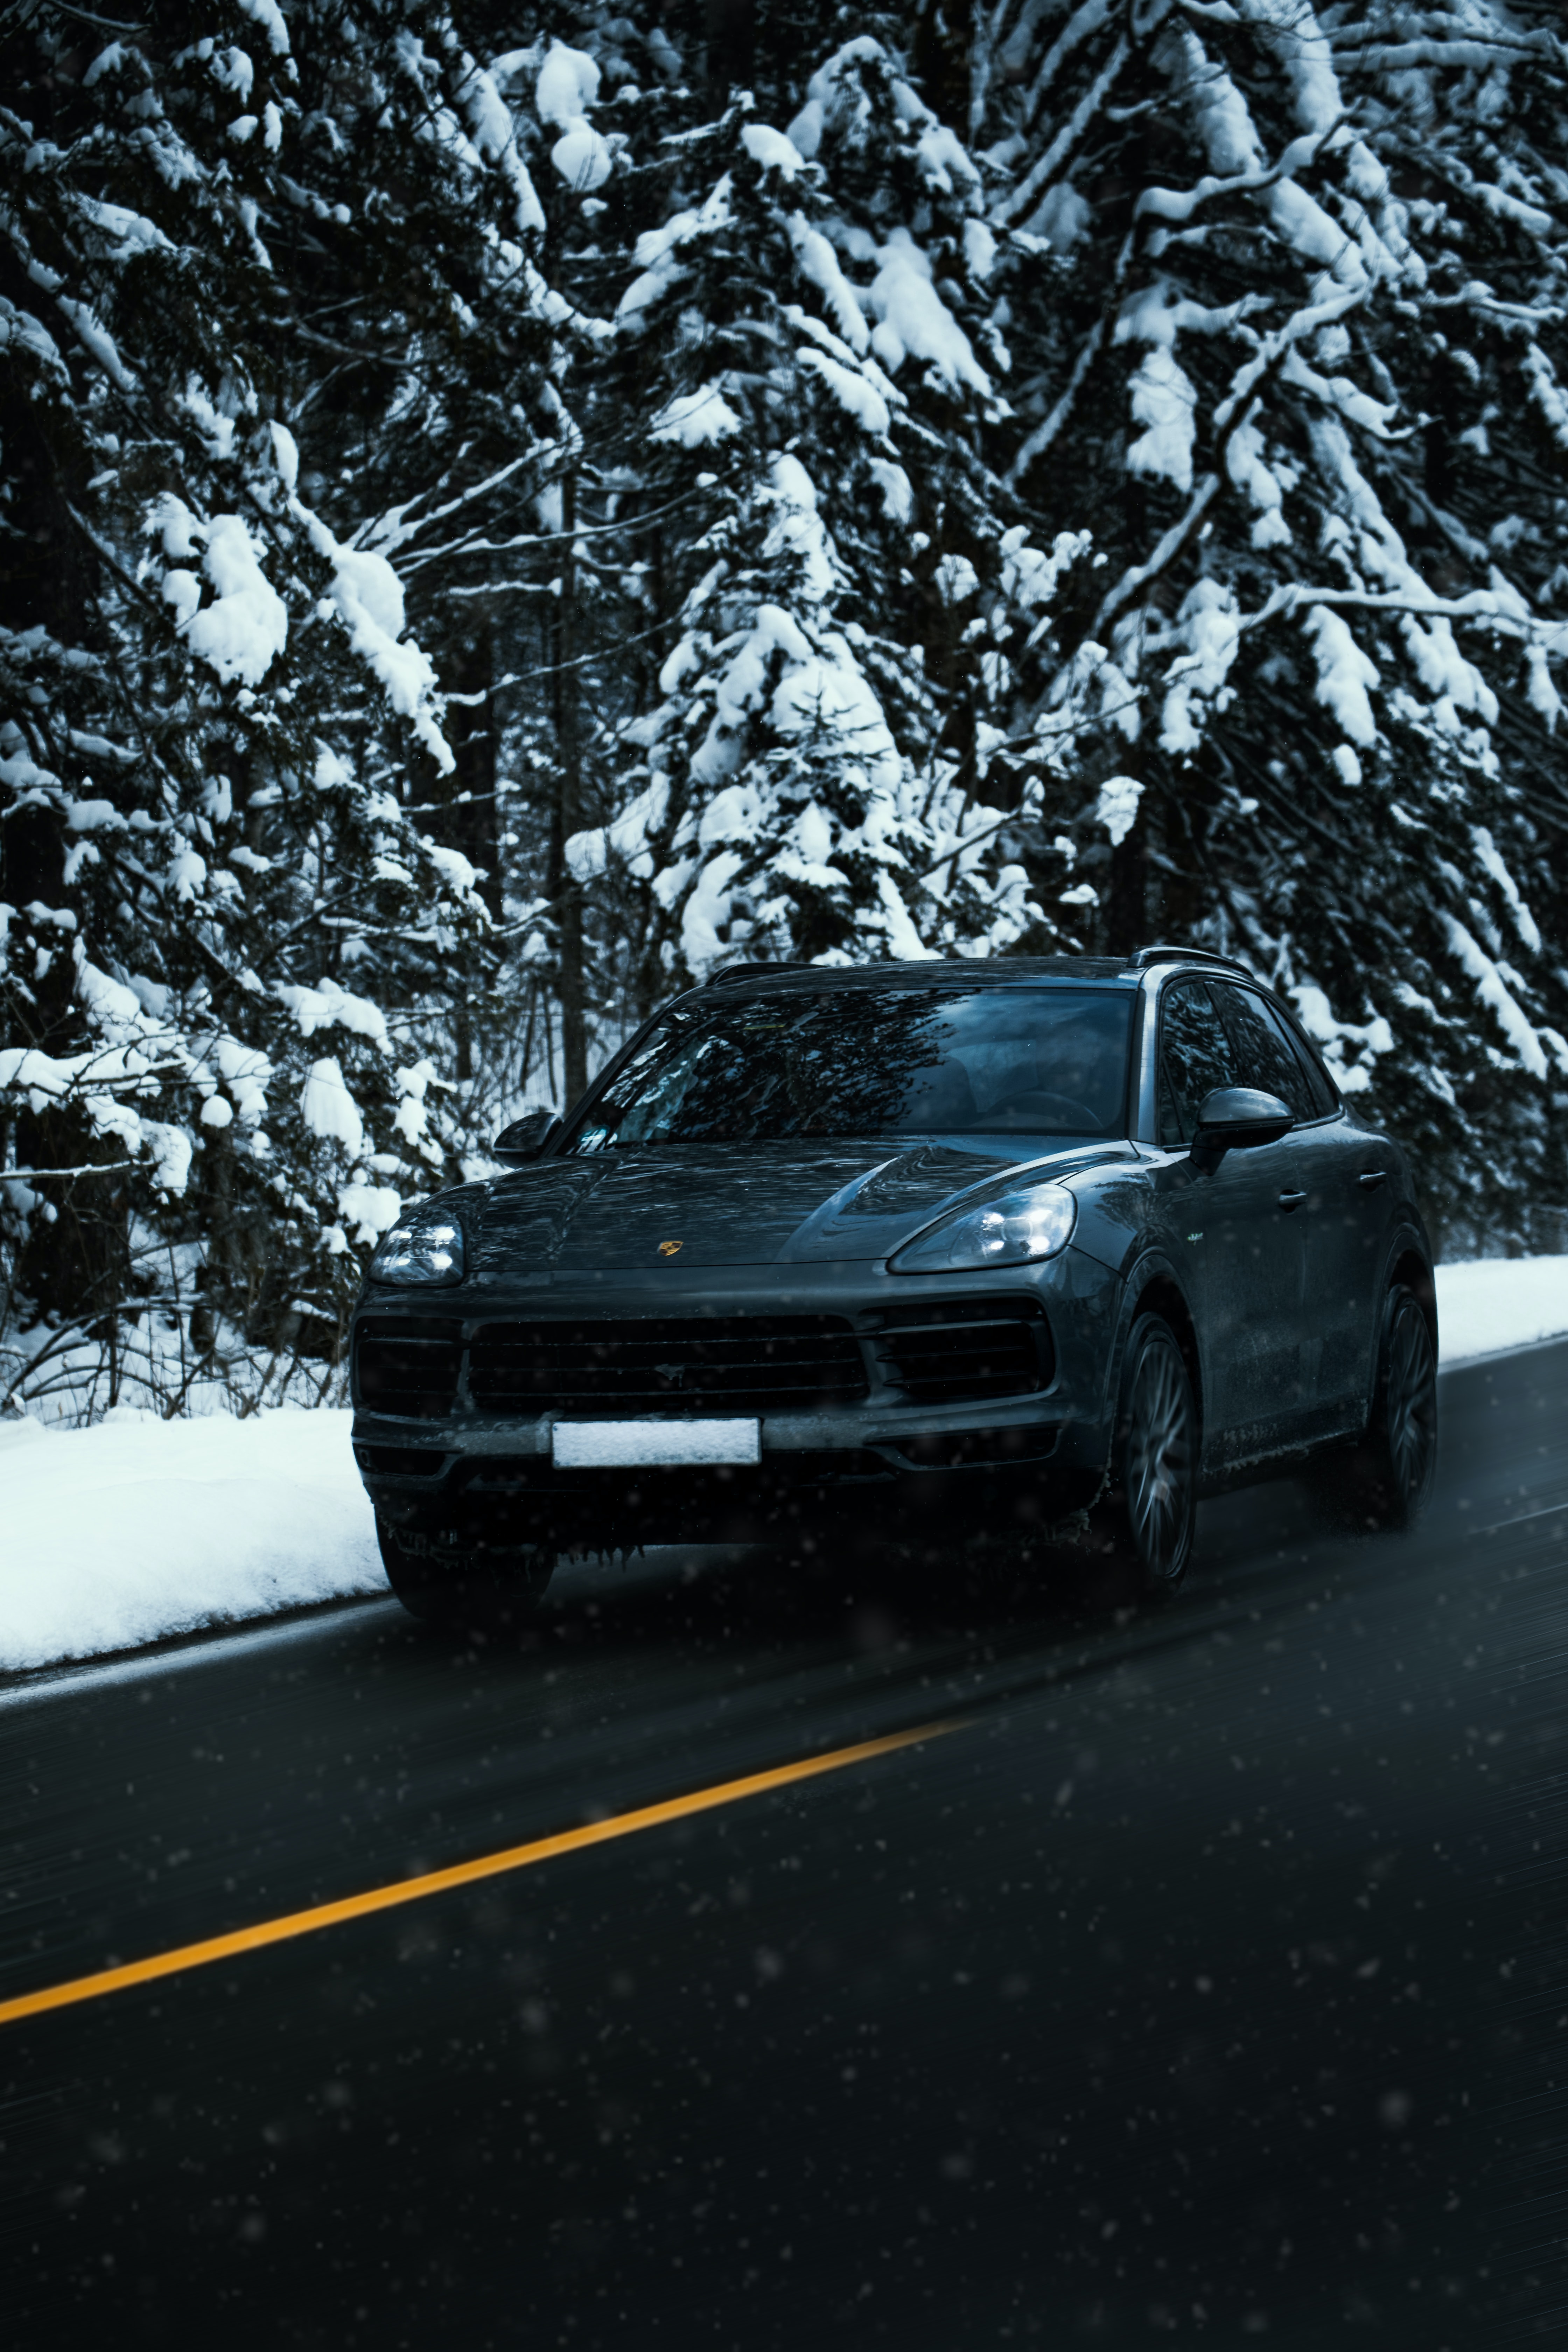 Popular Porsche Cayenne Image for Phone